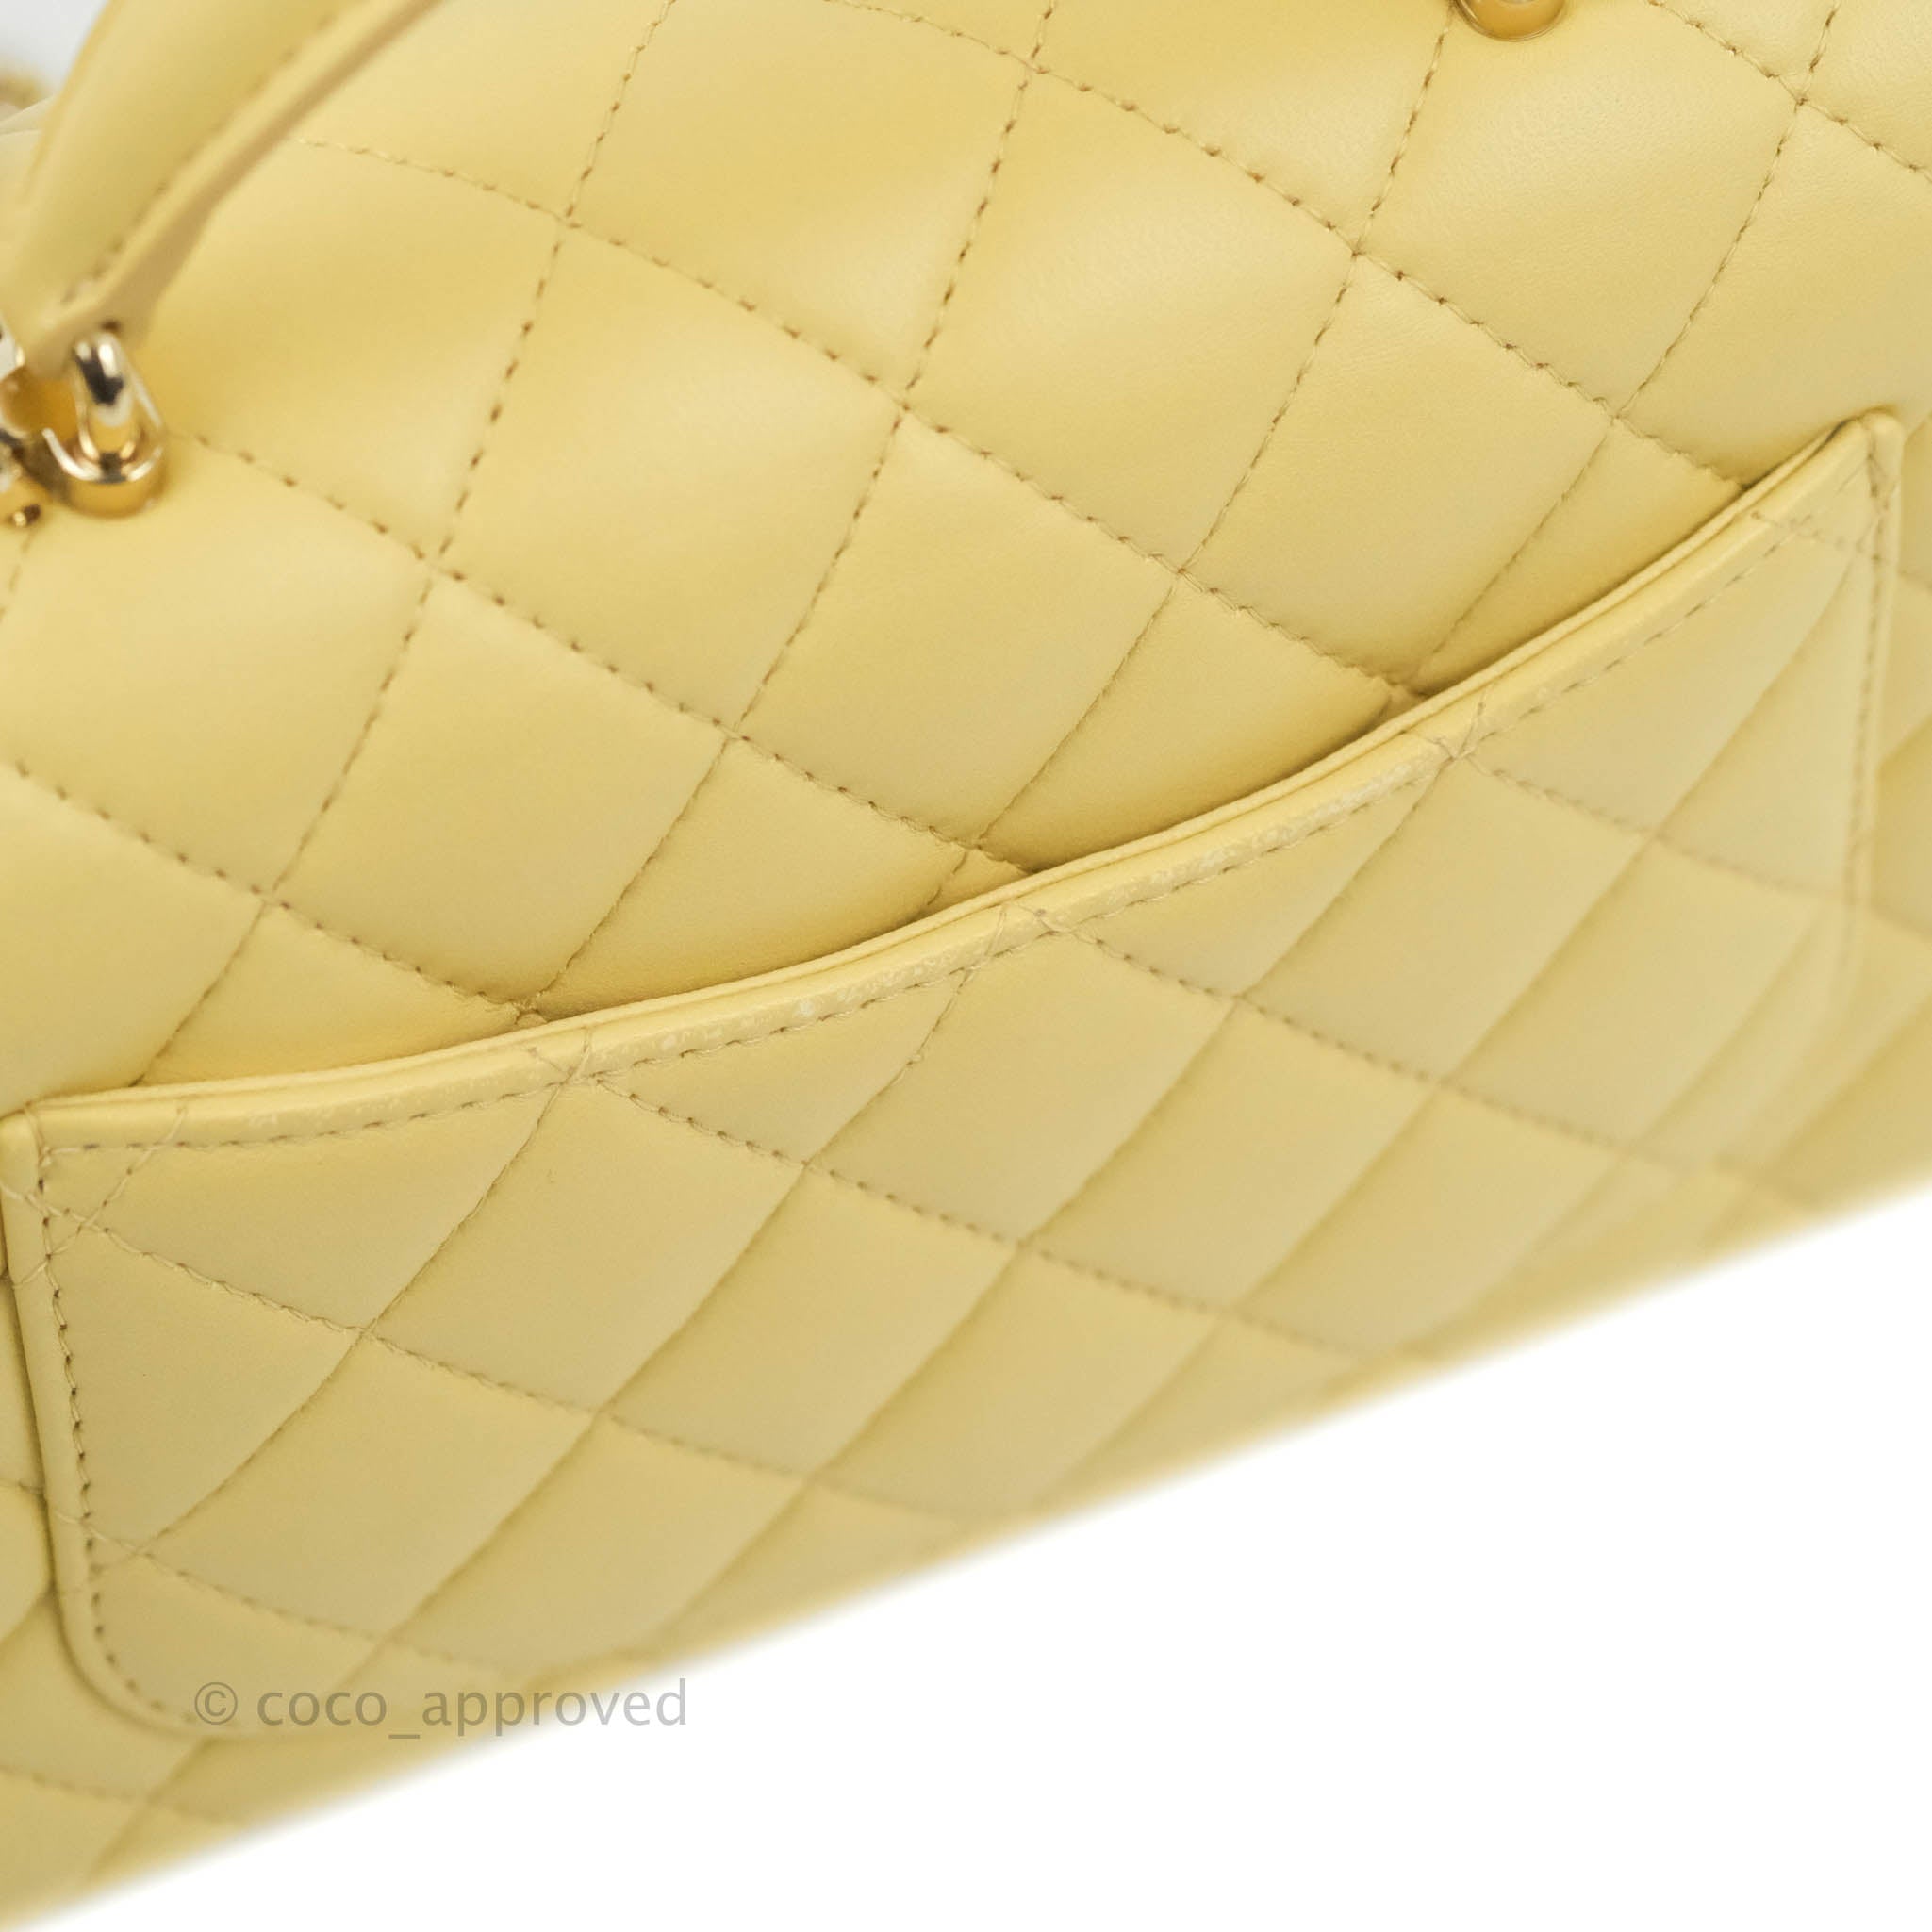 Chanel Top Handle Mini Rectangular Flap Bag Yellow Lambskin Gold